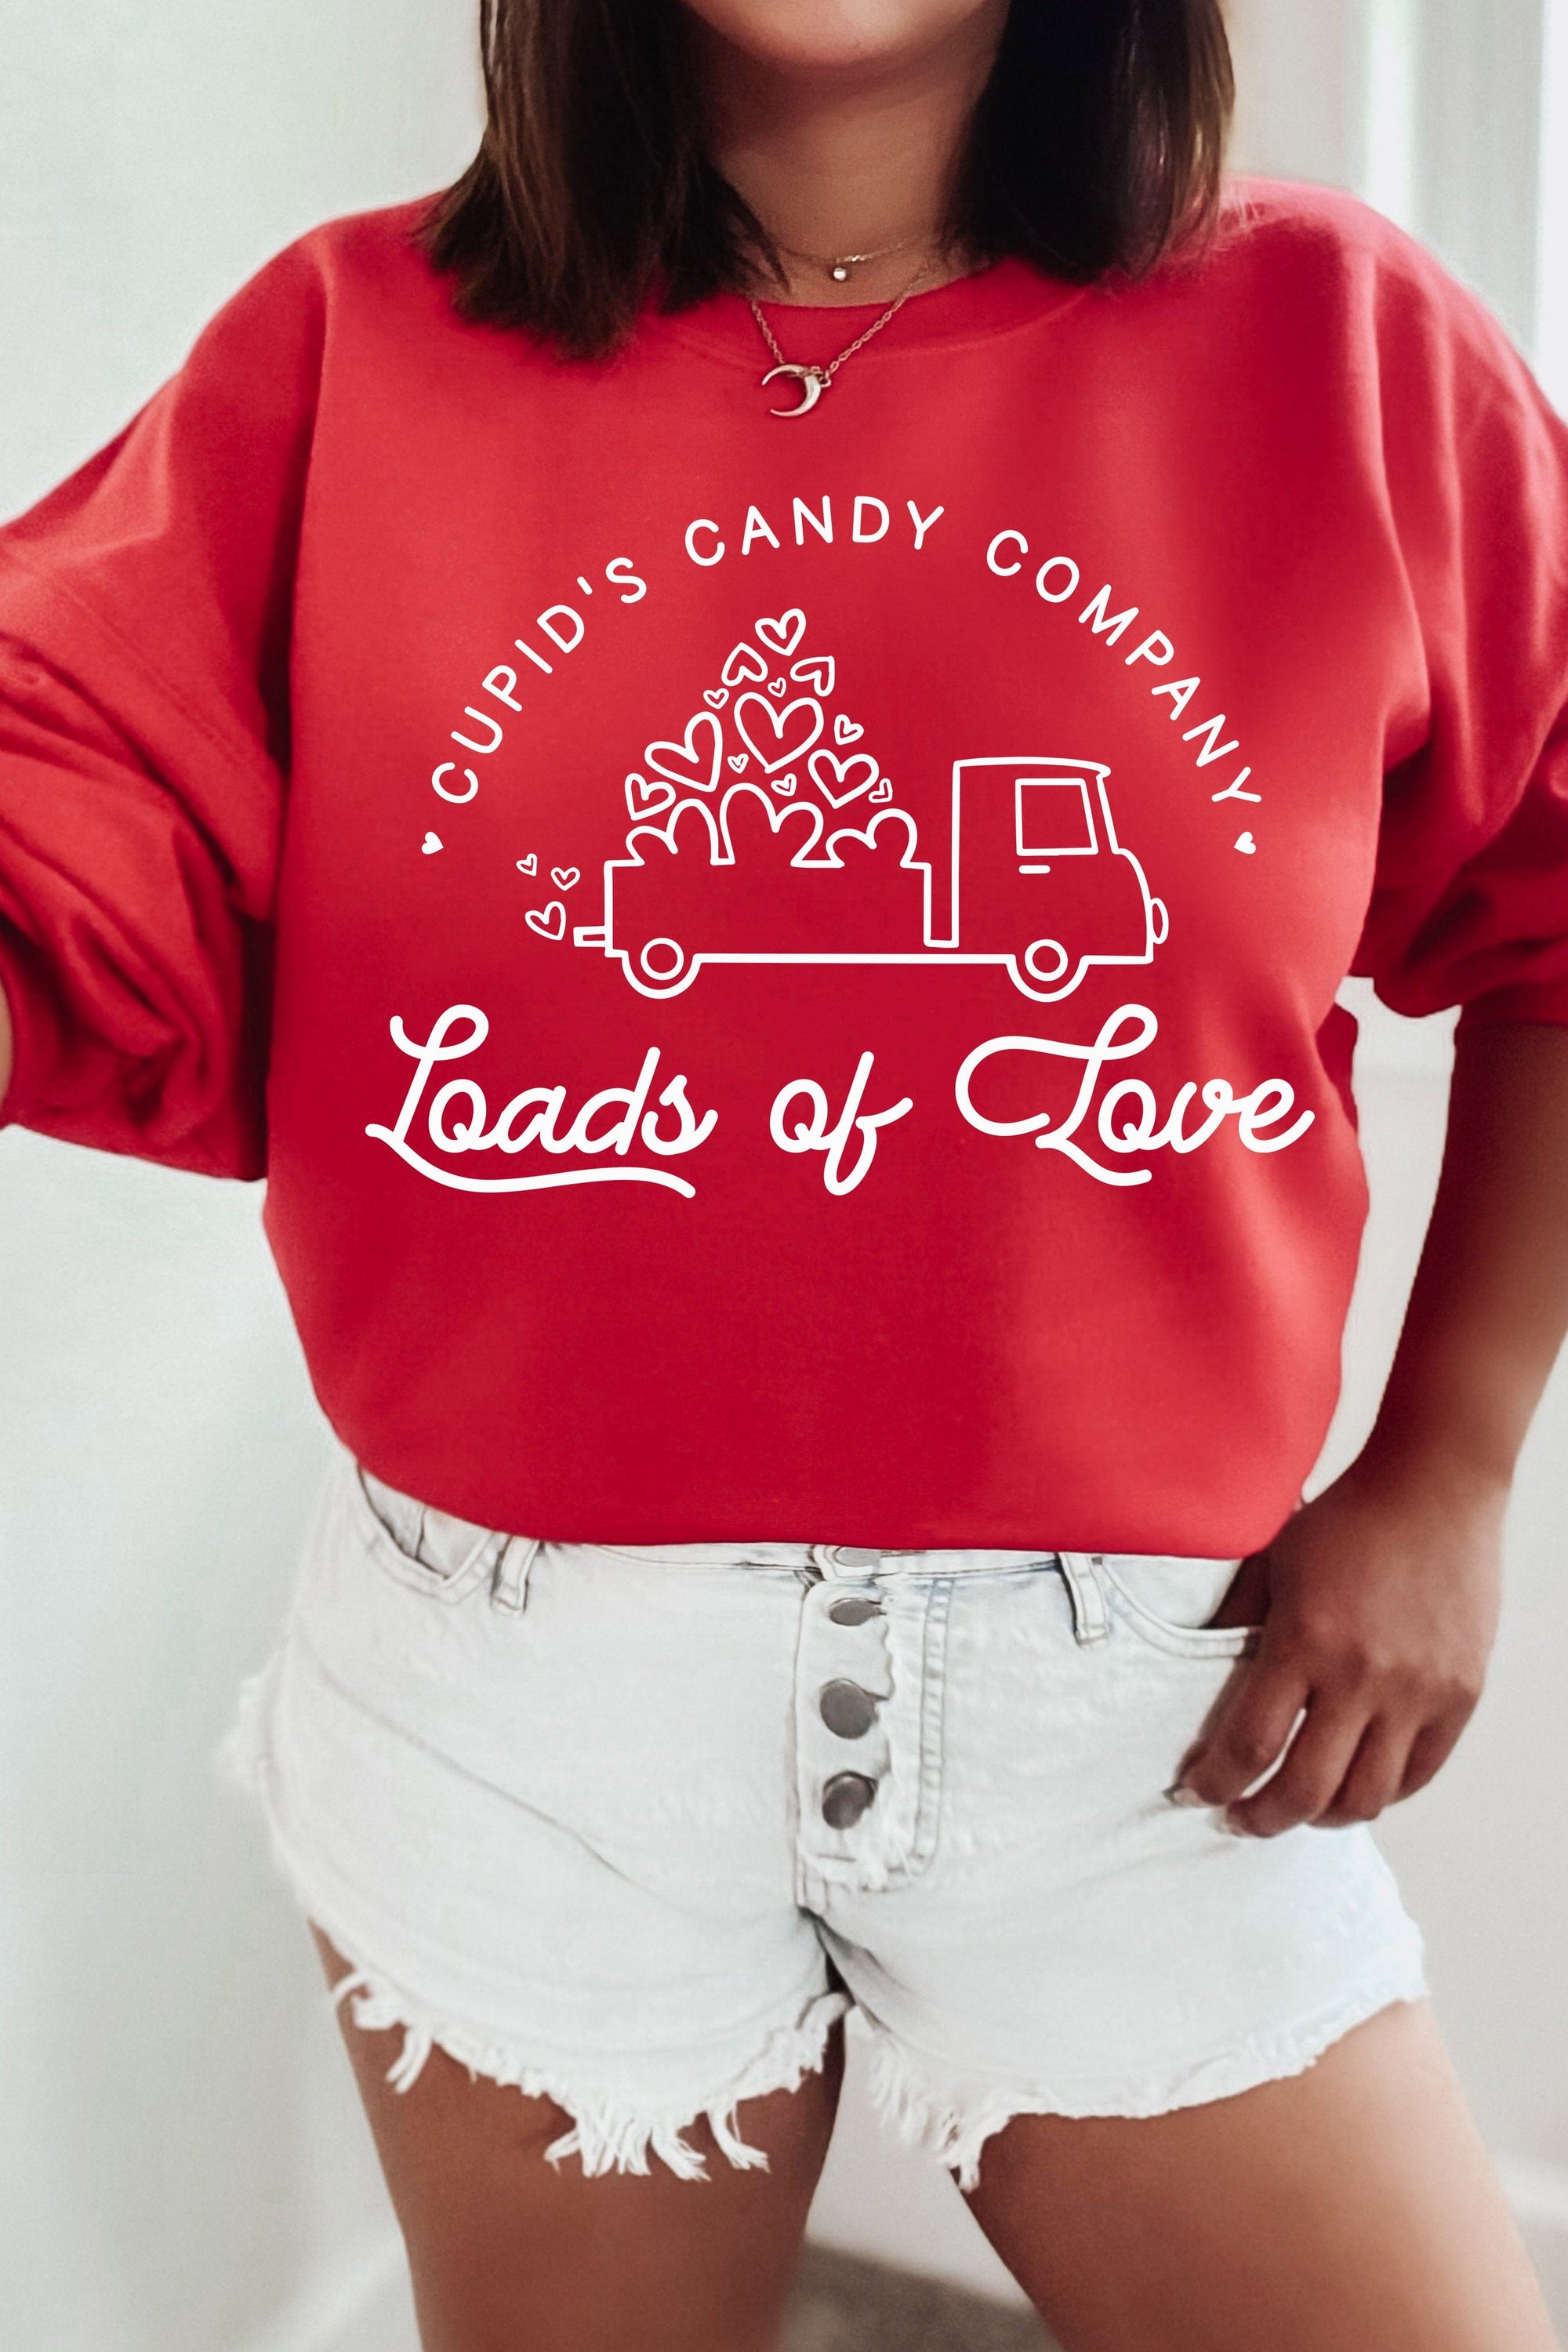 Cupid's Candy Company Fleece Lined Sweatshirt